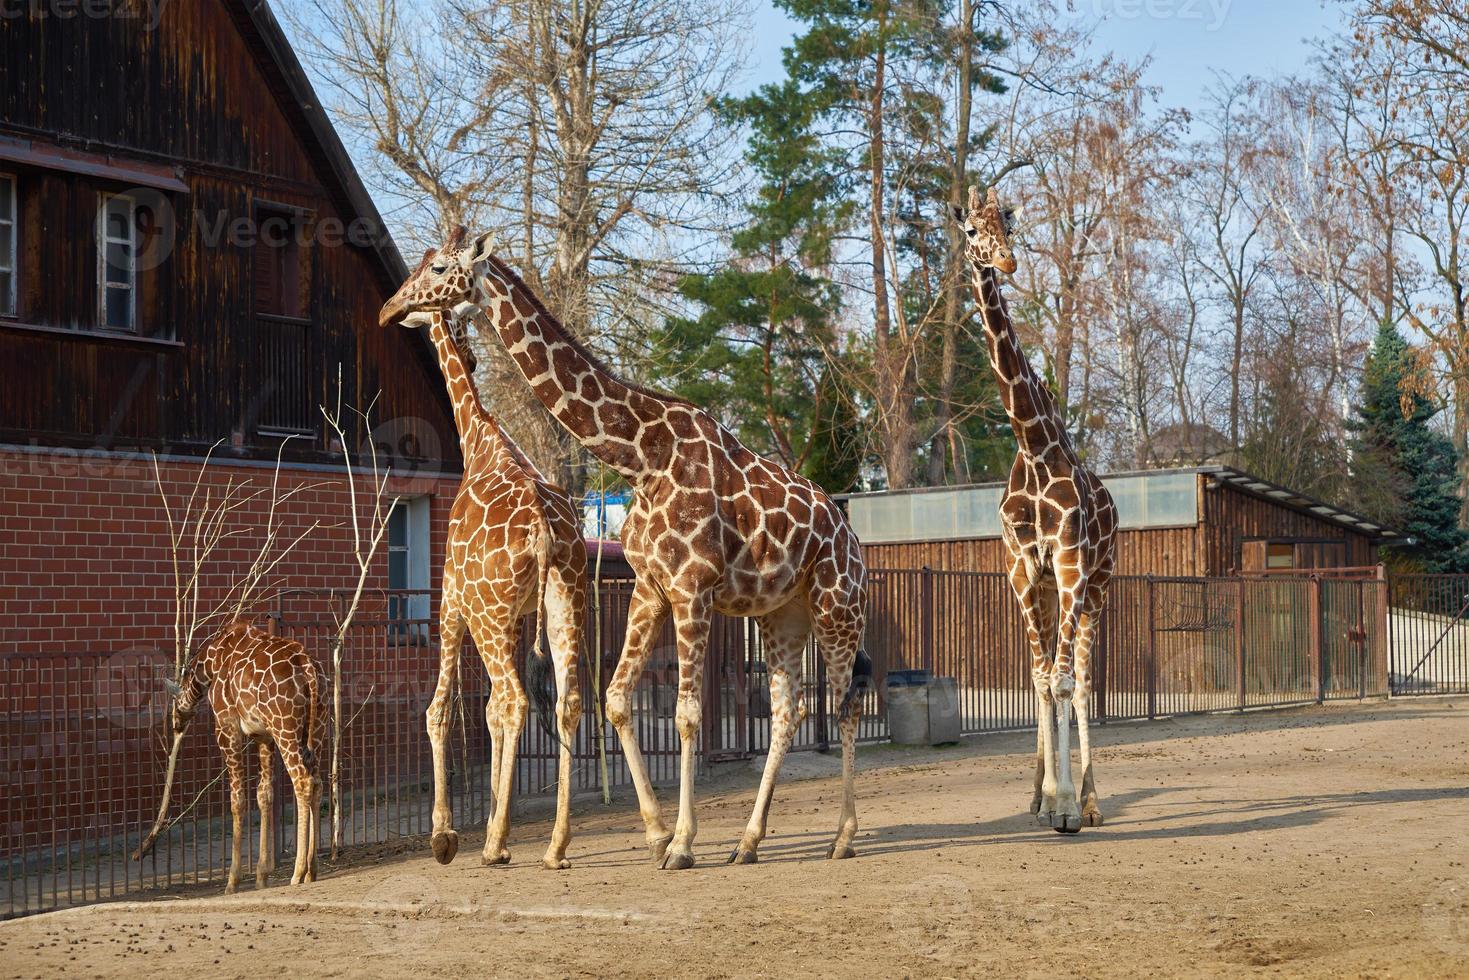 Giraffe family in Wroclaw Zoo photo